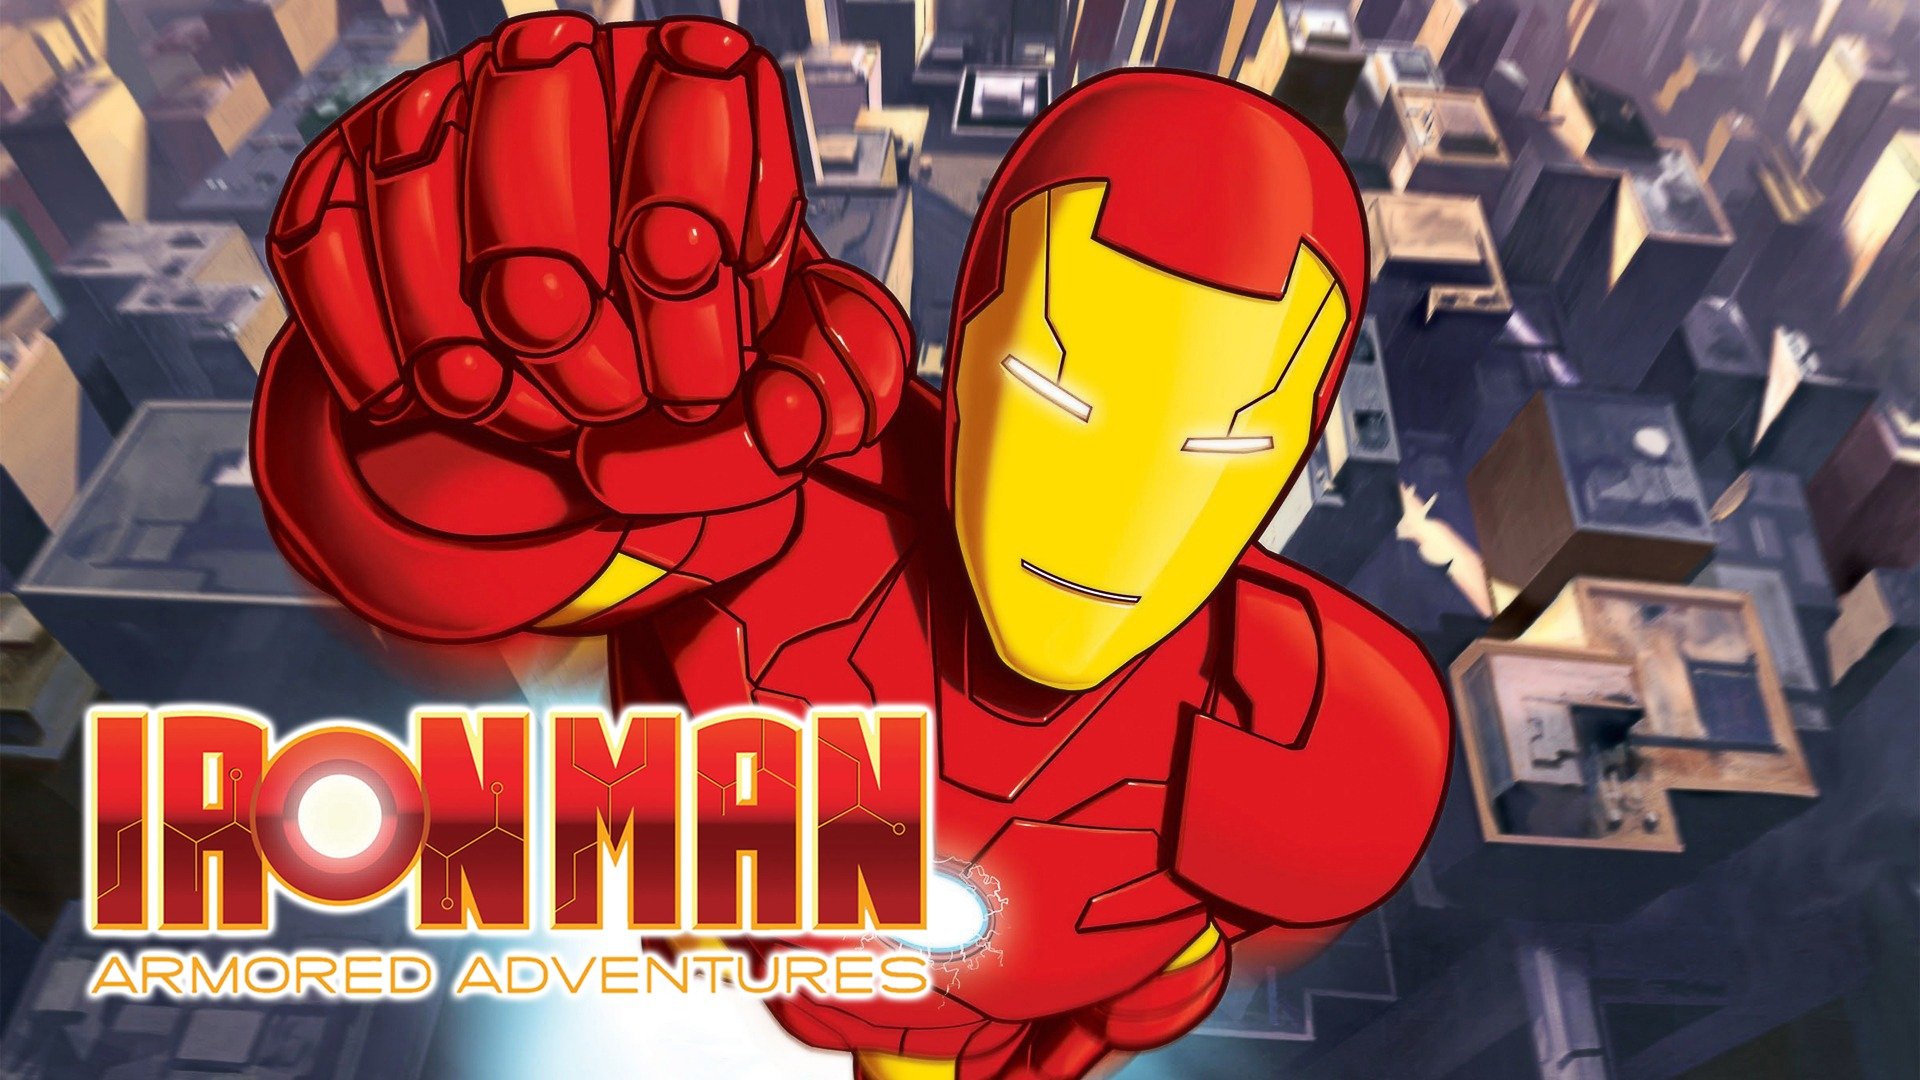 Iron Man Armored Adventures   Rotten Tomatoes